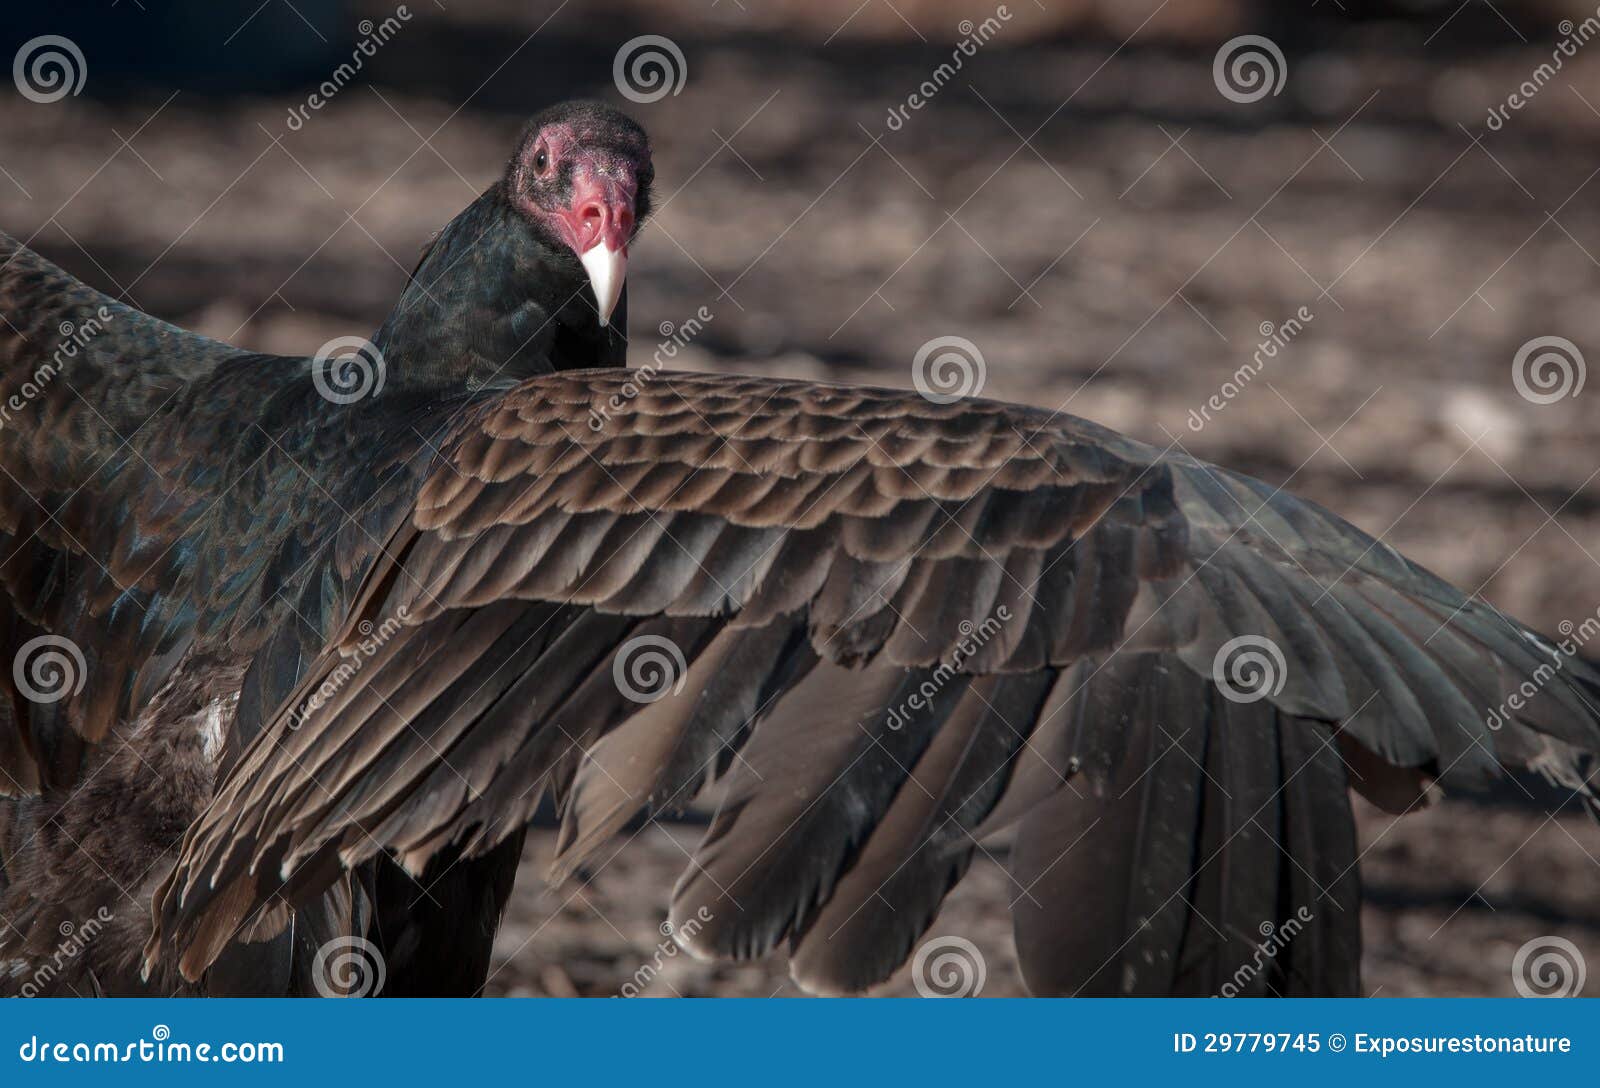 Turkey Vulture Posing stock image. Image of bird, your - 29779745